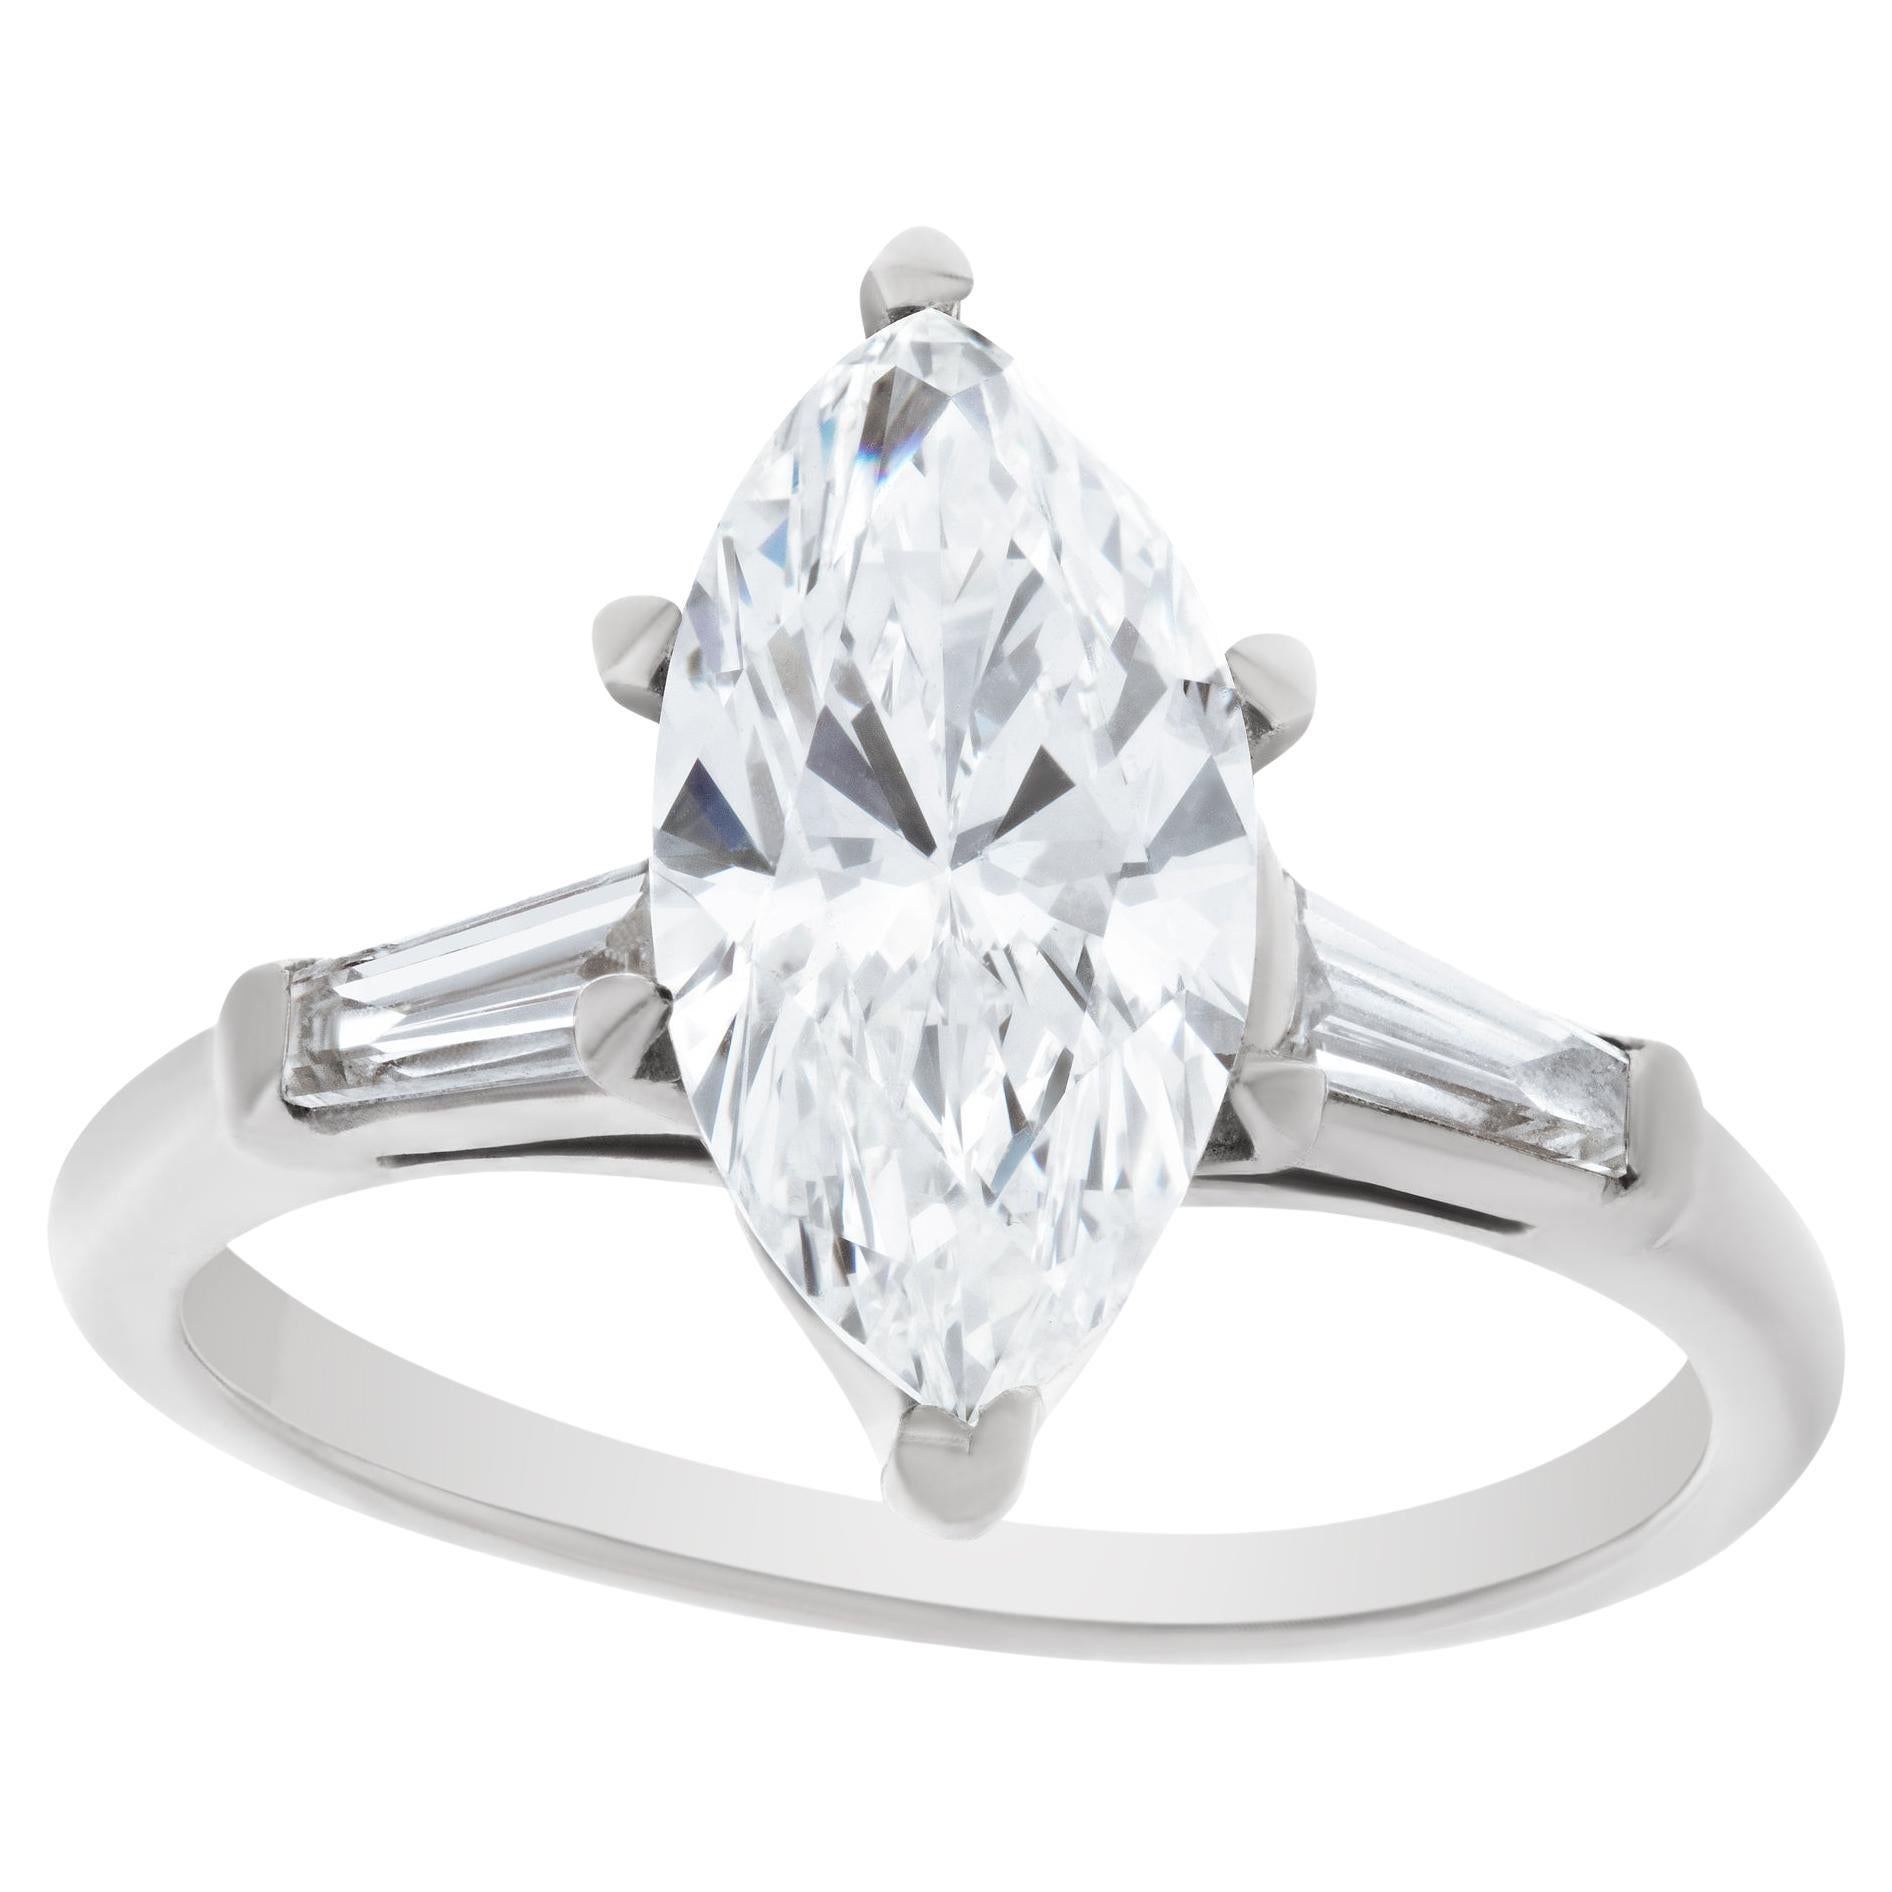 GIA certified marquise brilliant cut diamond Ring 1.75 carat 